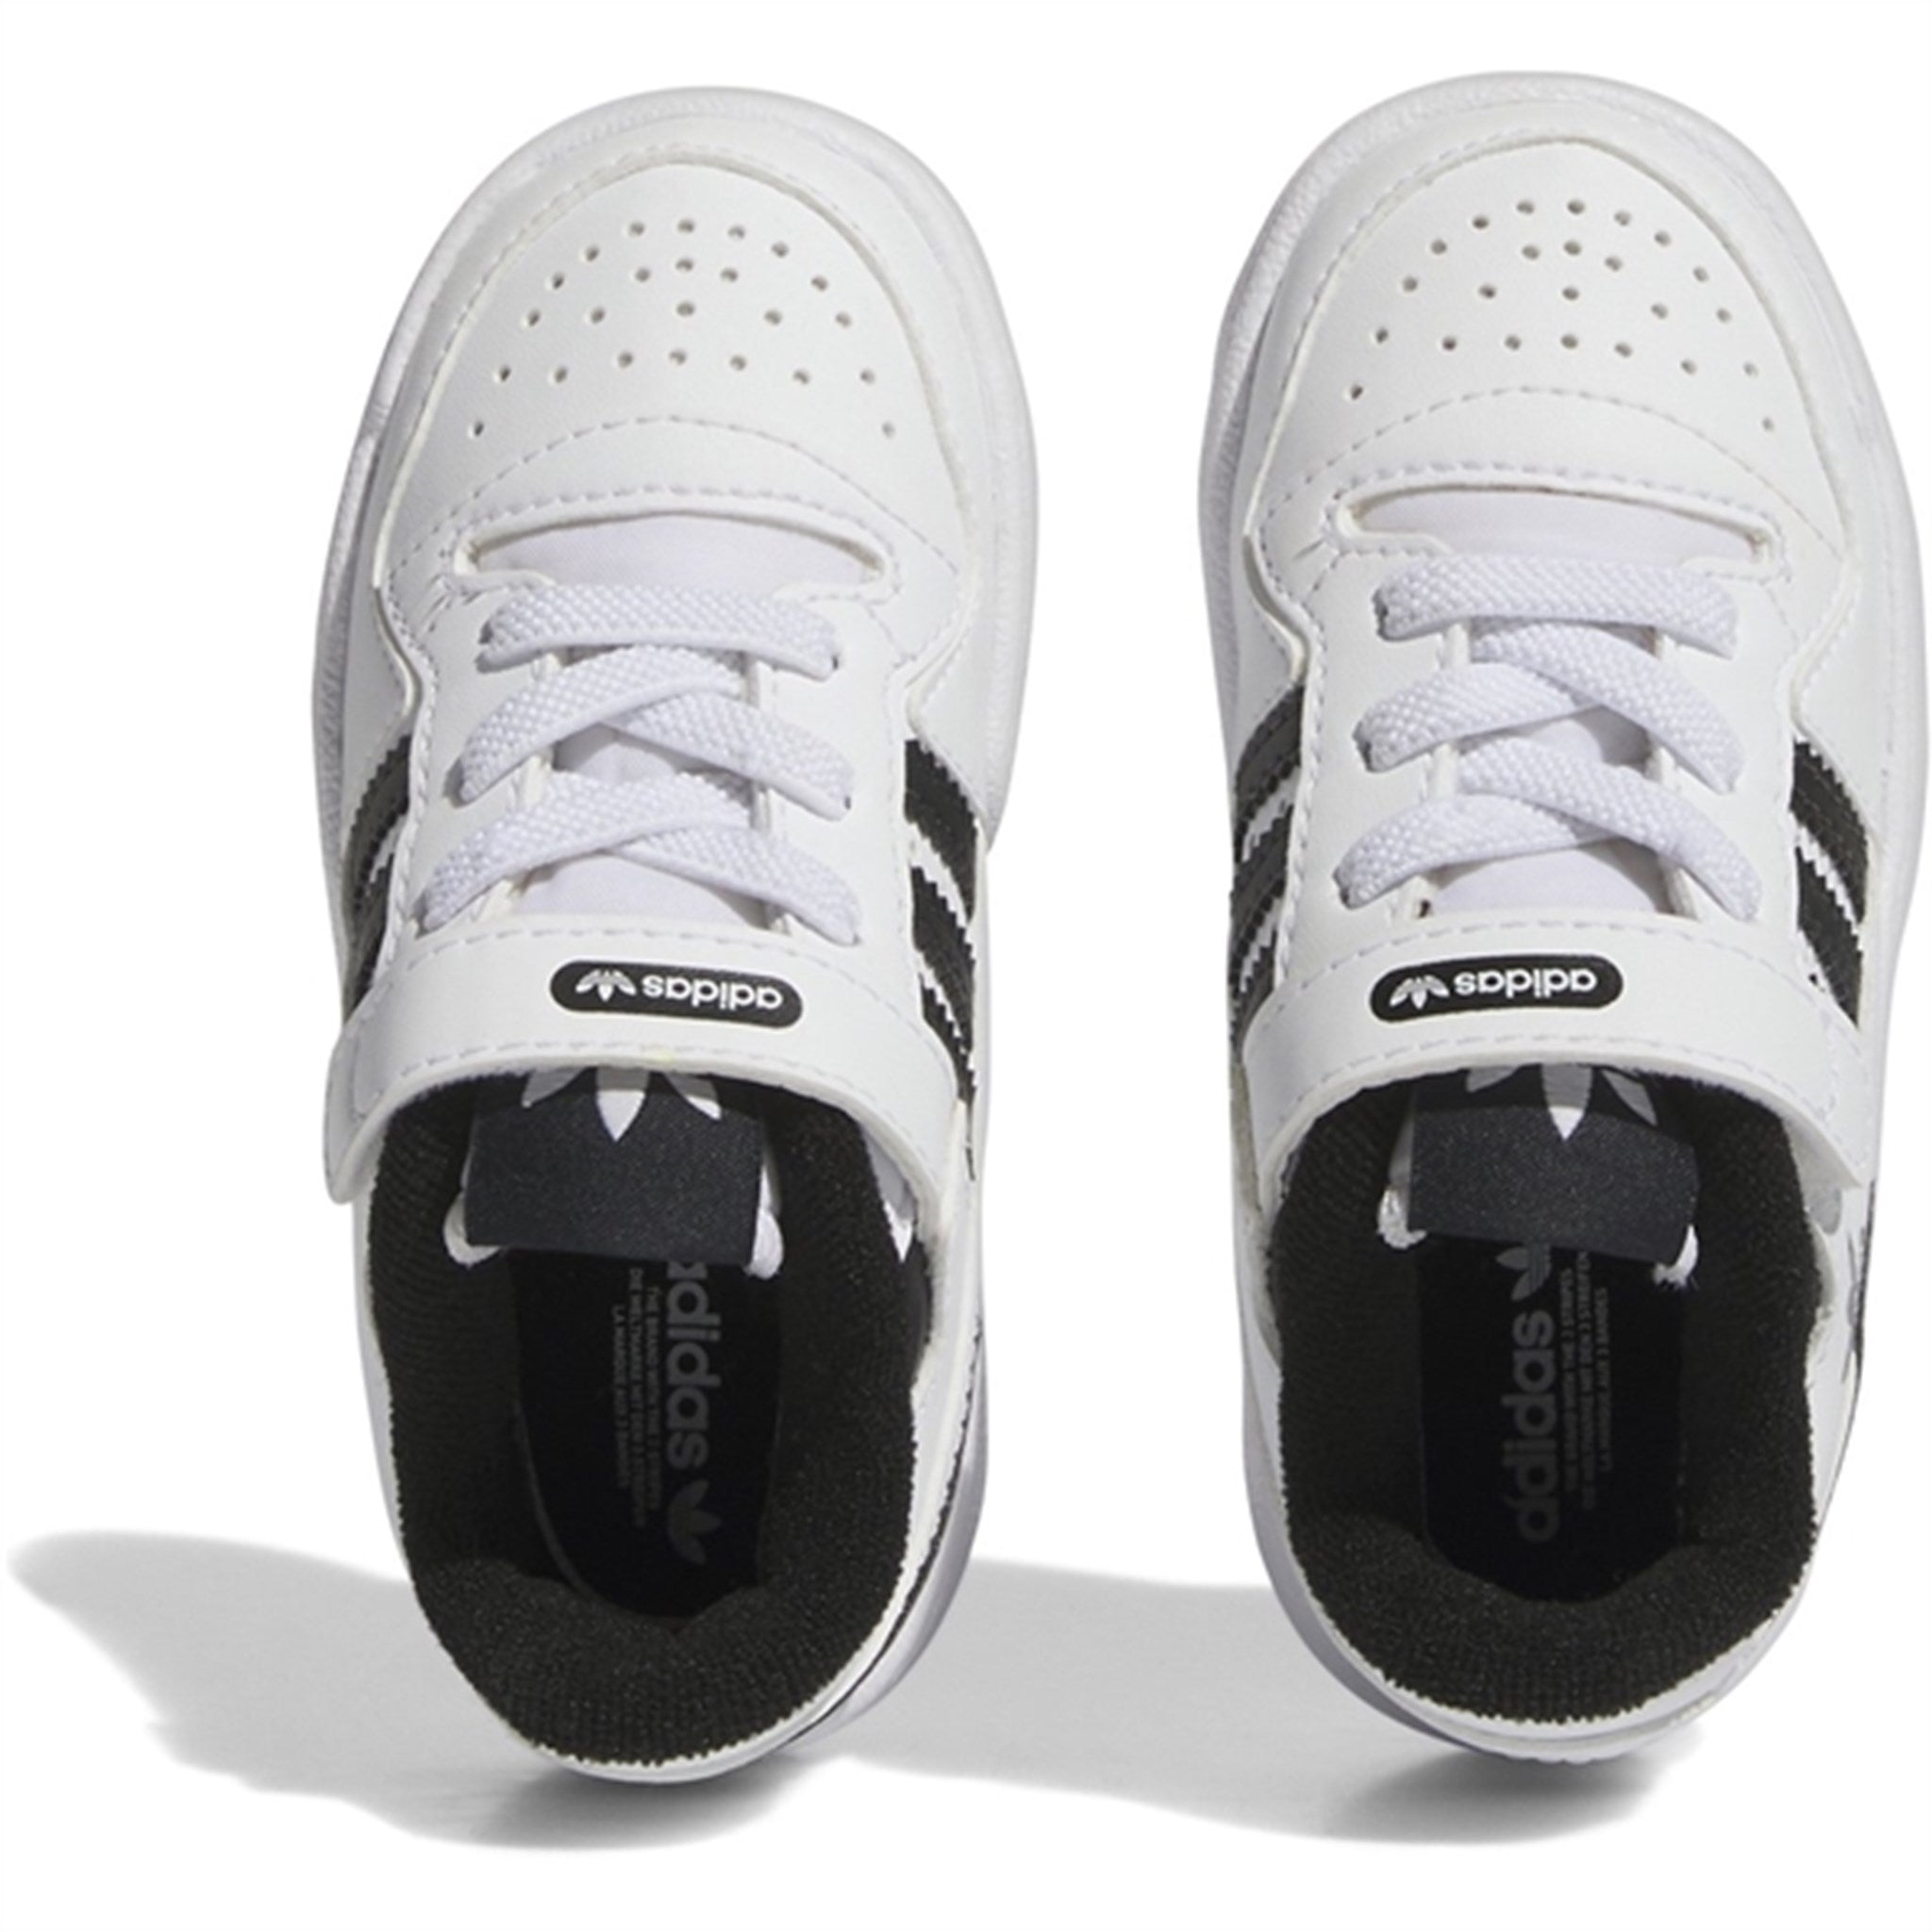 adidas Originals Forum Low 婴儿款黑/白色运动鞋 2